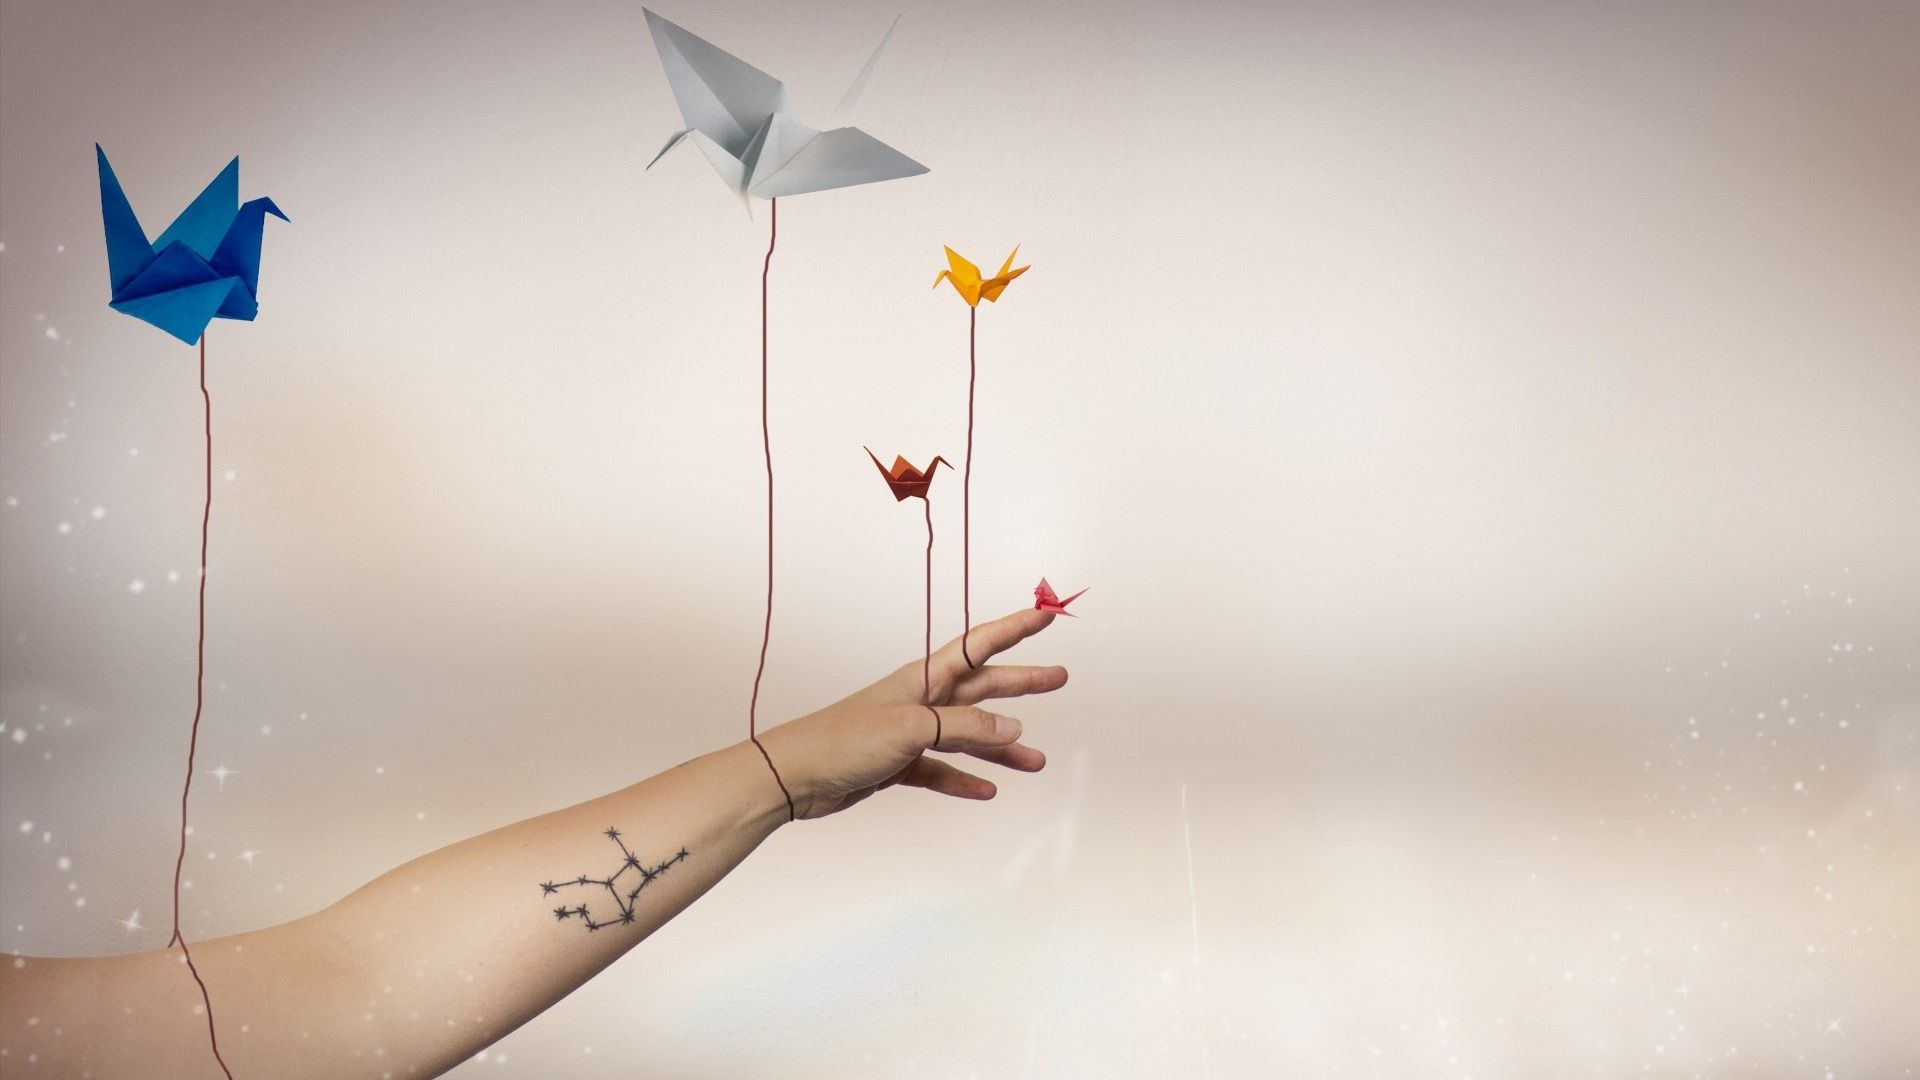 Wallpaper Digital artwork of paper birds on hand